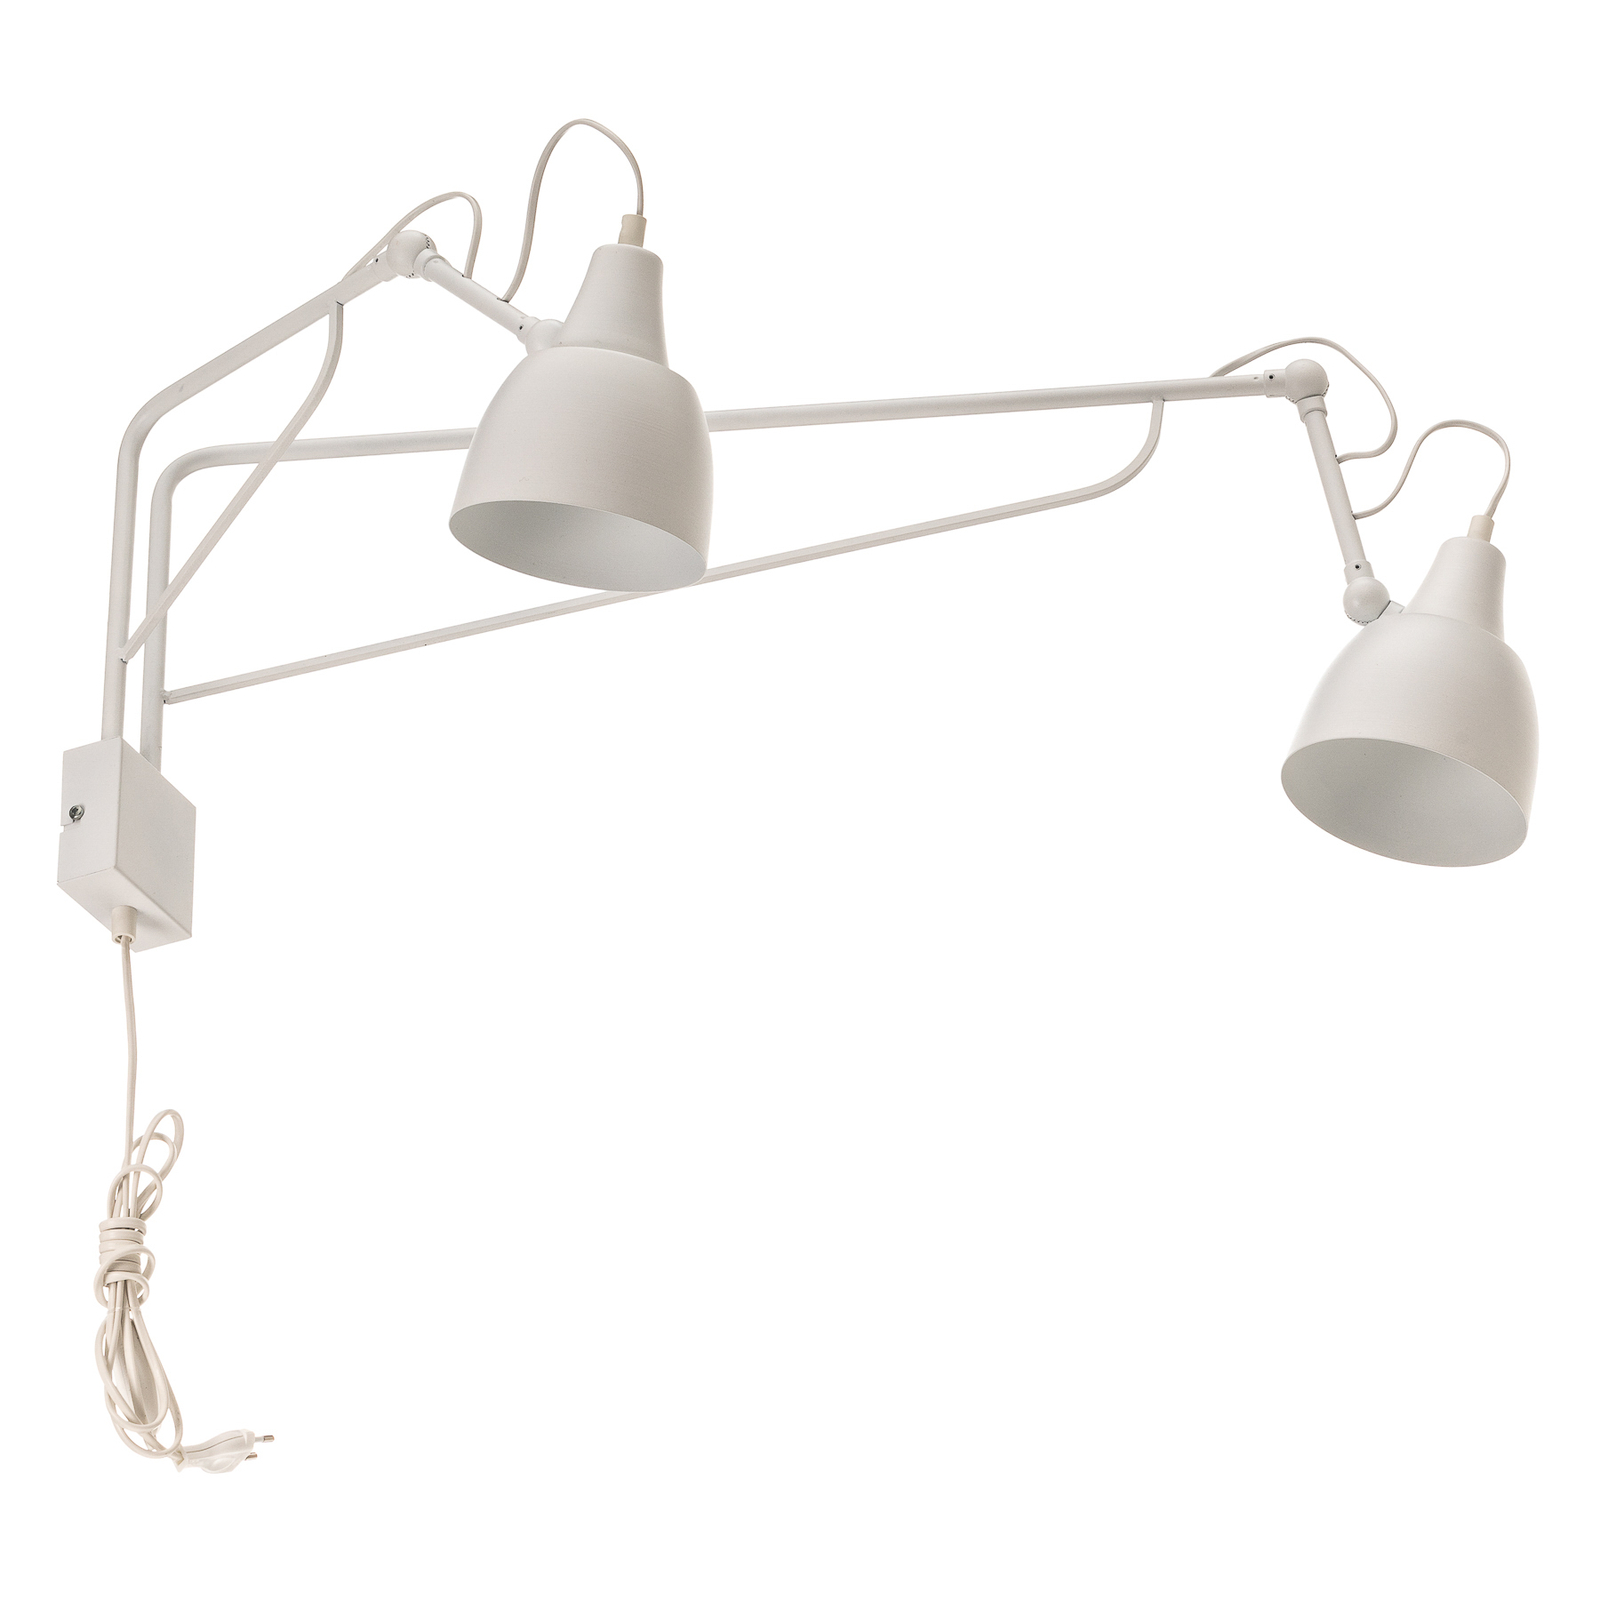 Wandlamp 1002 met stekker, 2-lamps, wit